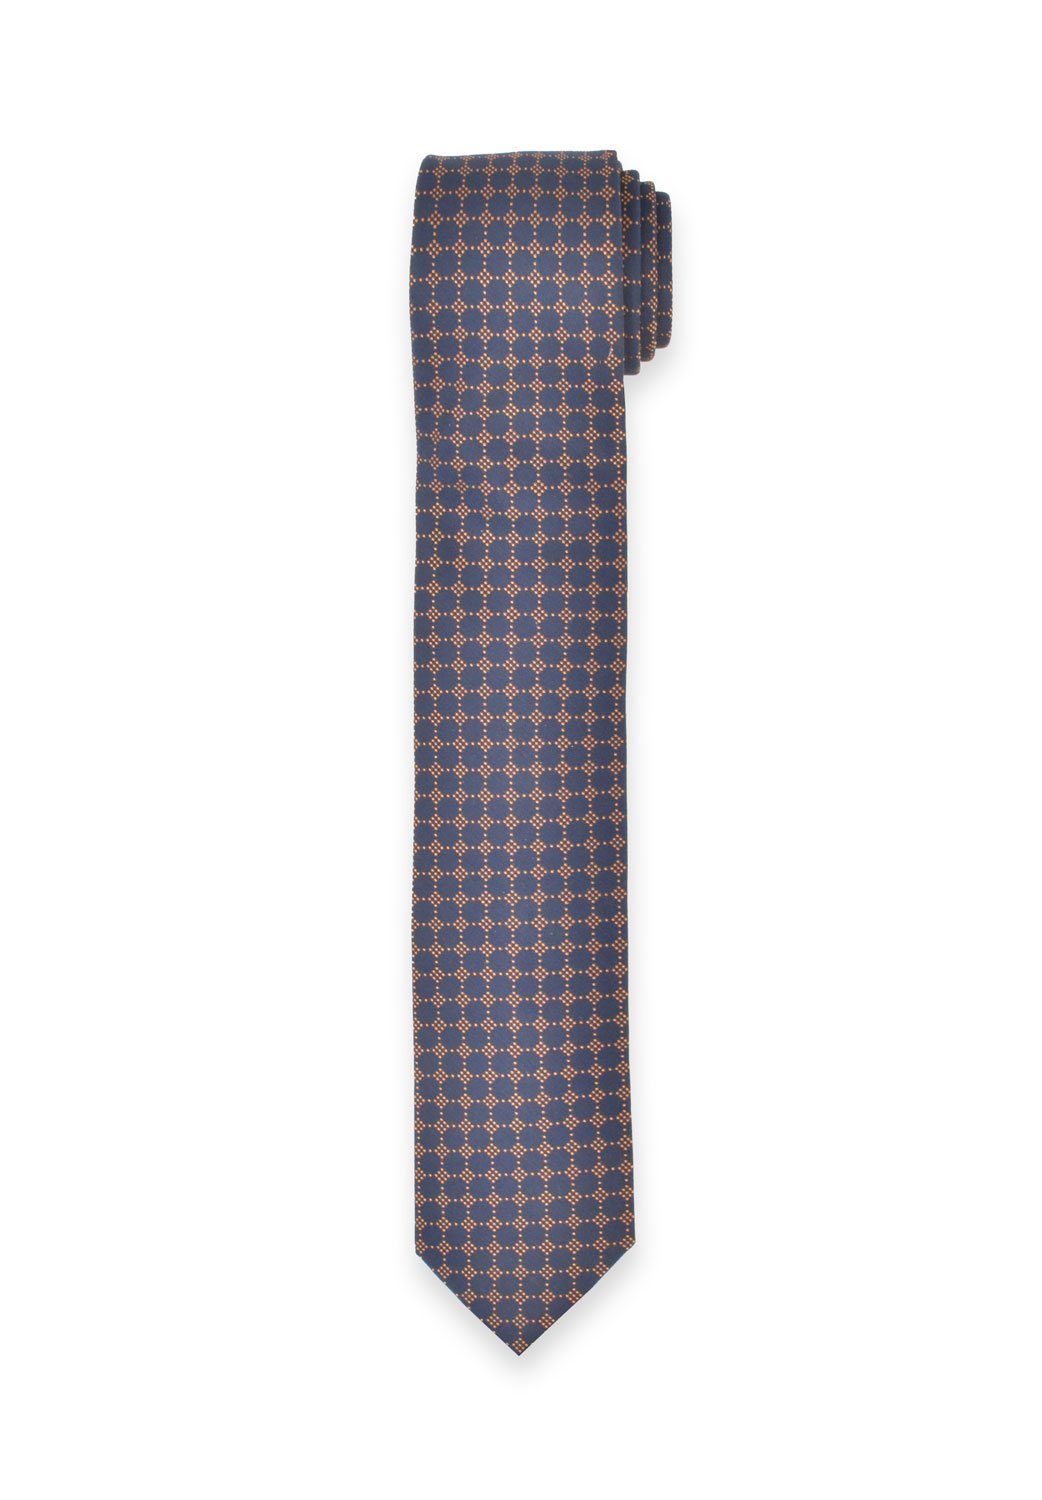 MARVELIS Krawatte Krawatte - Punkte - Dunkelblau/Cognac - 6,5 cm